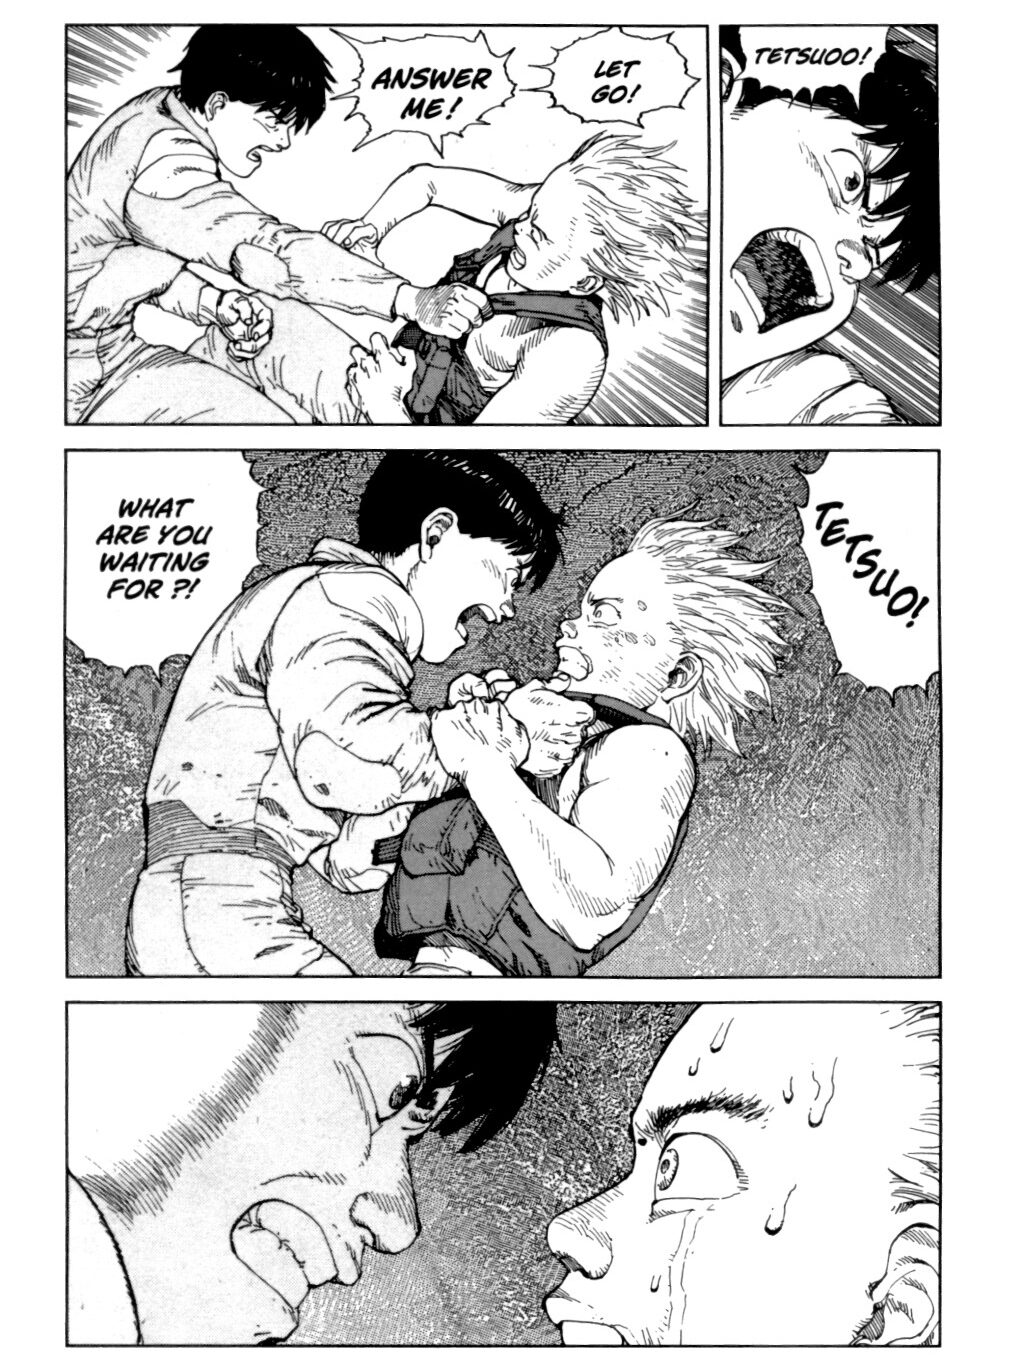 Kaneda confronts Tetsuo in Akira Vol. 5 (1990), Kodansha. Words and art by Katsuhiro Otomo.